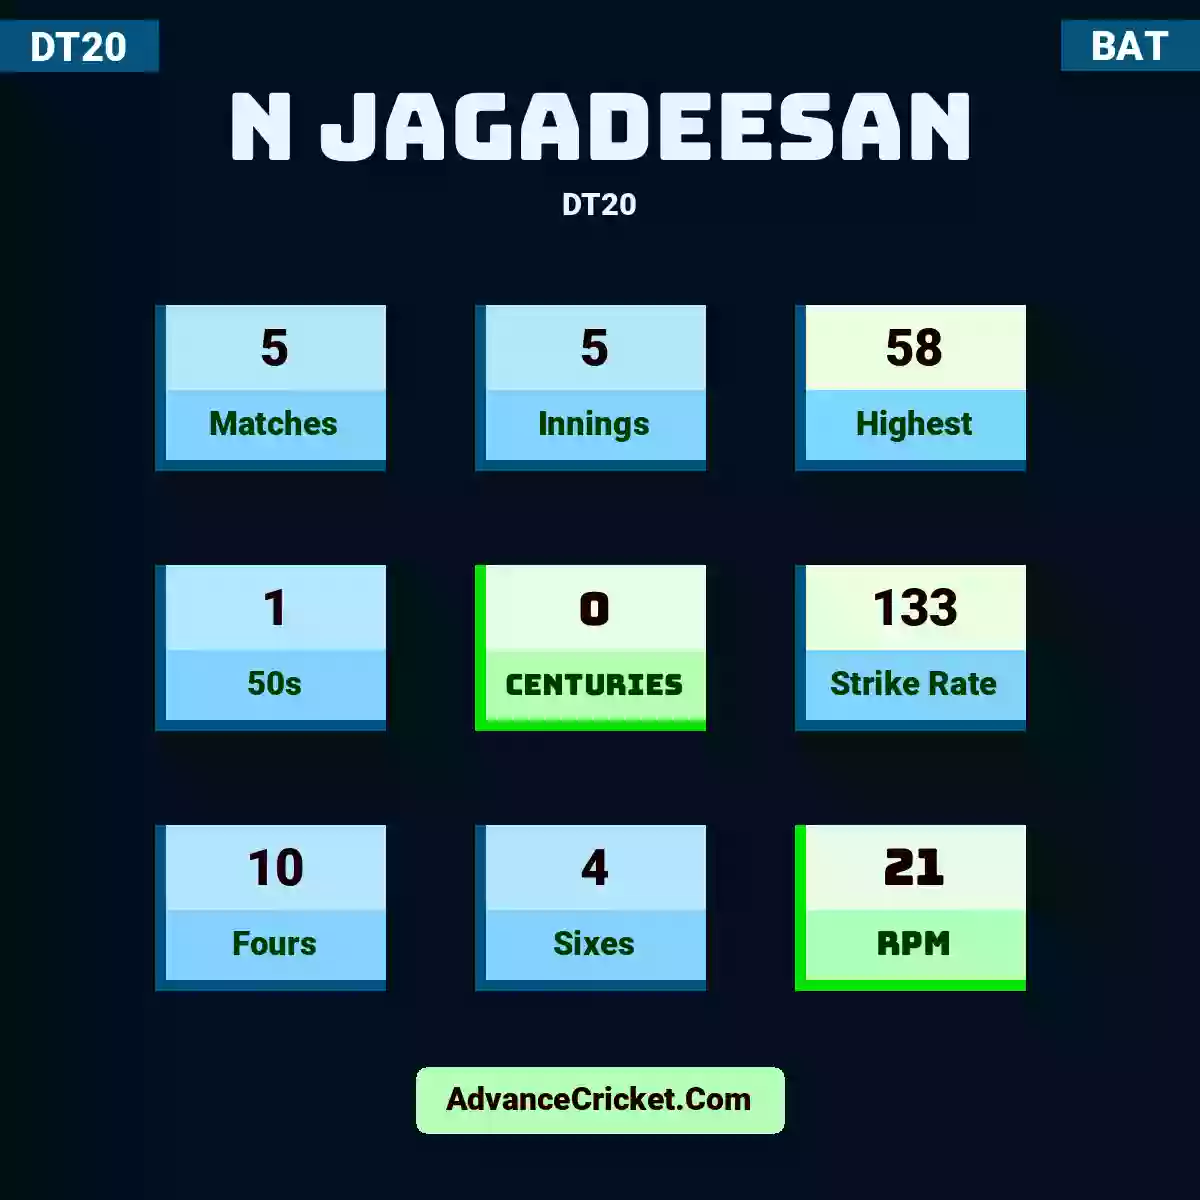 N Jagadeesan DT20 , N Jagadeesan played 5 matches, scored 58 runs as highest, 1 half-centuries, and 0 centuries, with a strike rate of 133. N.Jagadeesan hit 10 fours and 4 sixes, with an RPM of 21.